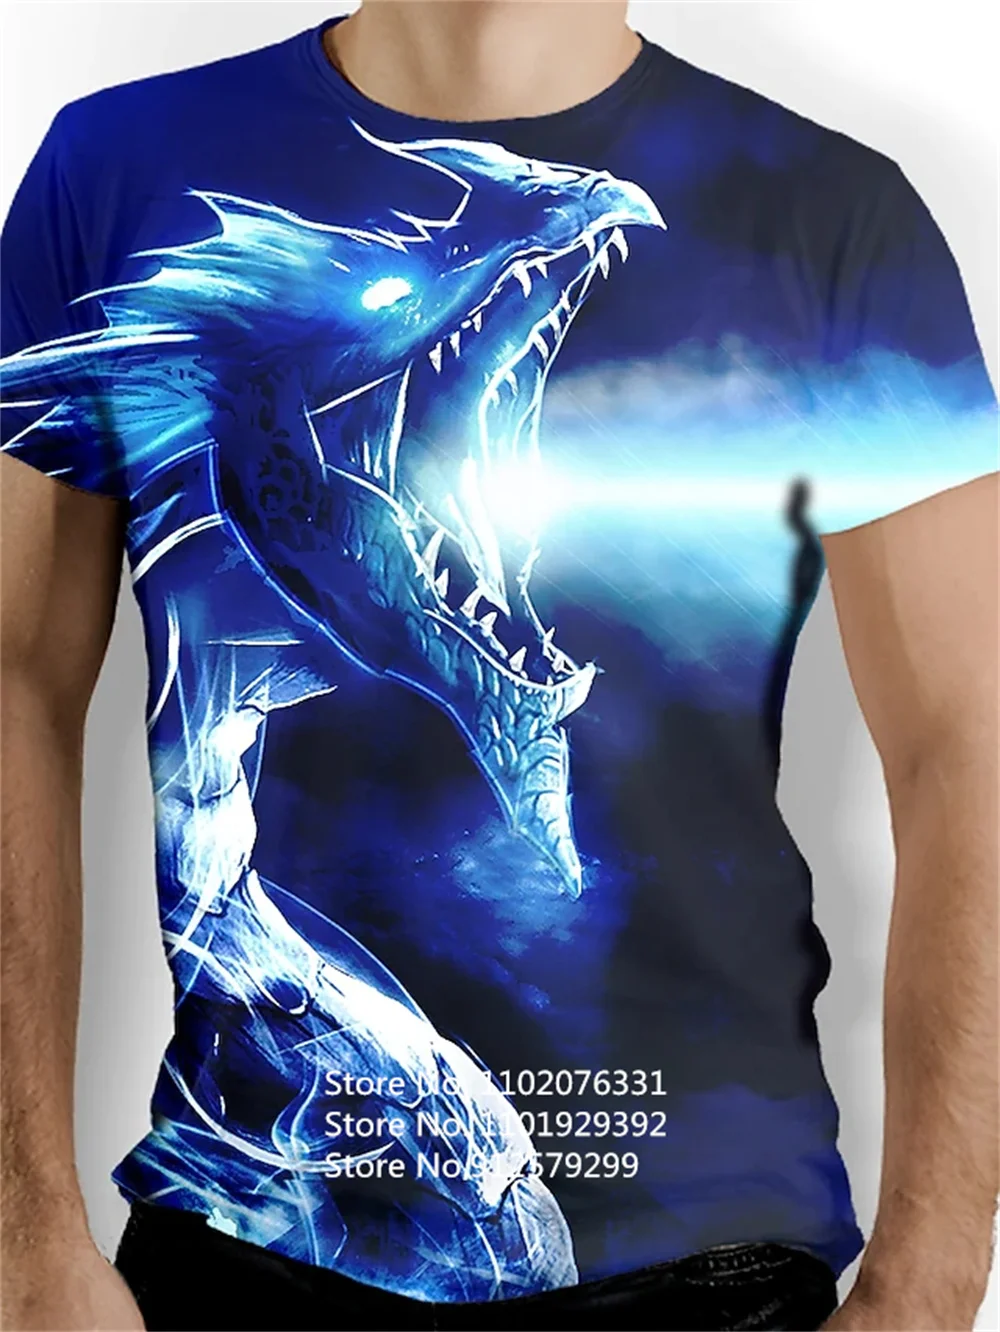 Купи Hipster Men Tee Shirt 3D Animal Blue Dragon Printed T Shirt Harajuku Short Sleeve T Shirts Unisex Casual Tops за 142 рублей в магазине AliExpress